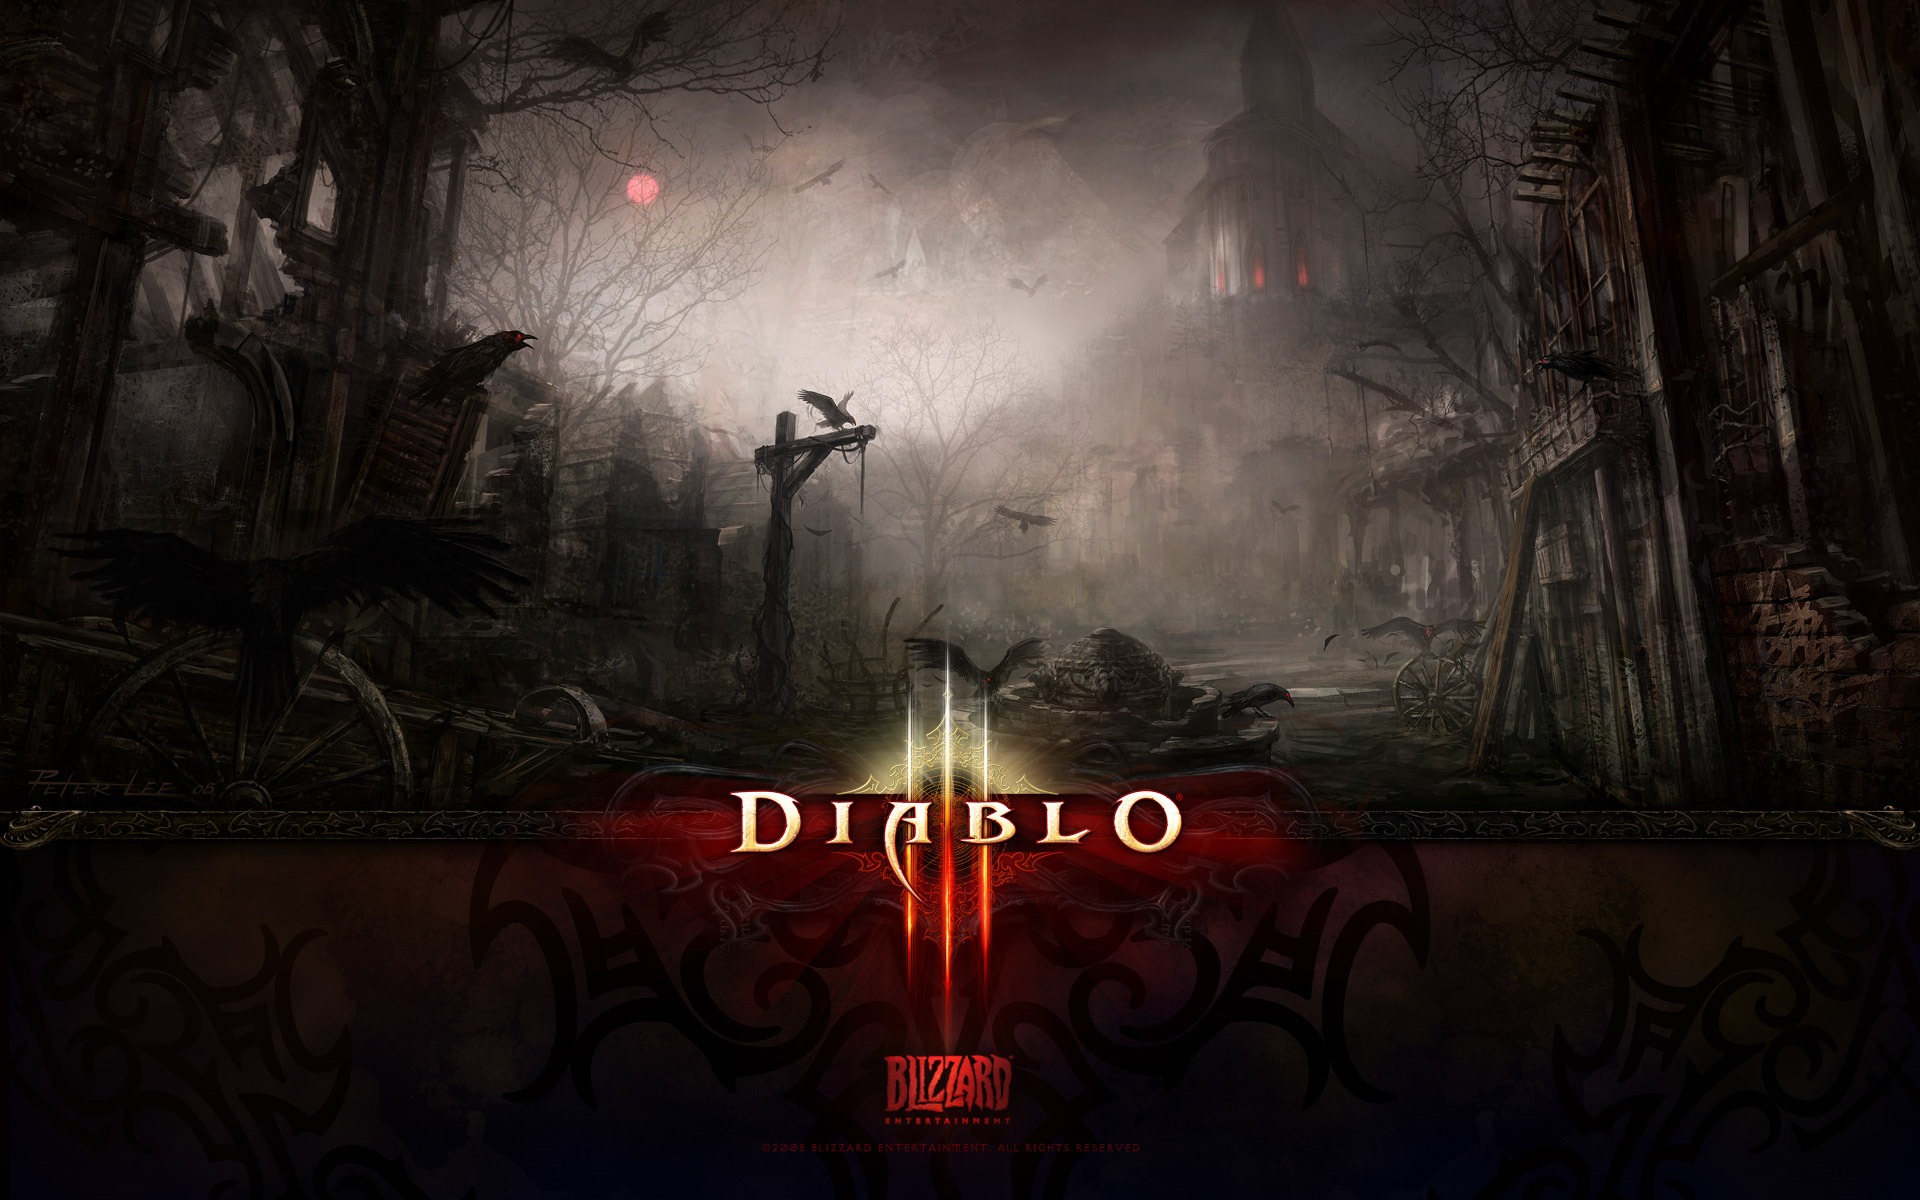 Diablo Iii Wallpaper Games In Jpg Format For